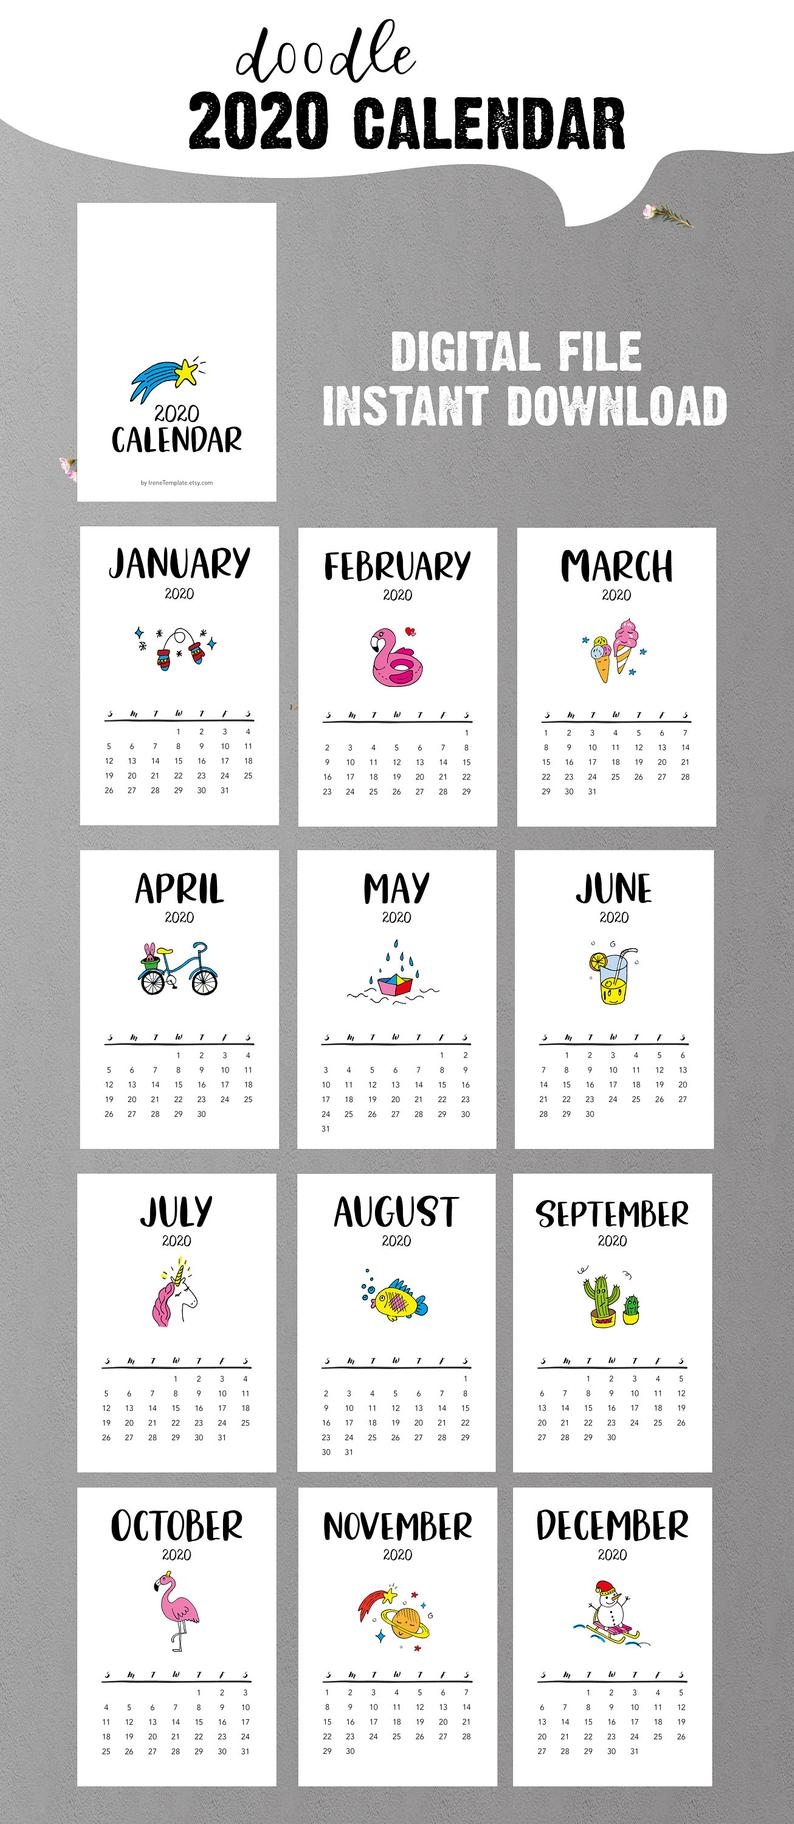 Printable #accessory #calendar #doodle #20202020 Printable